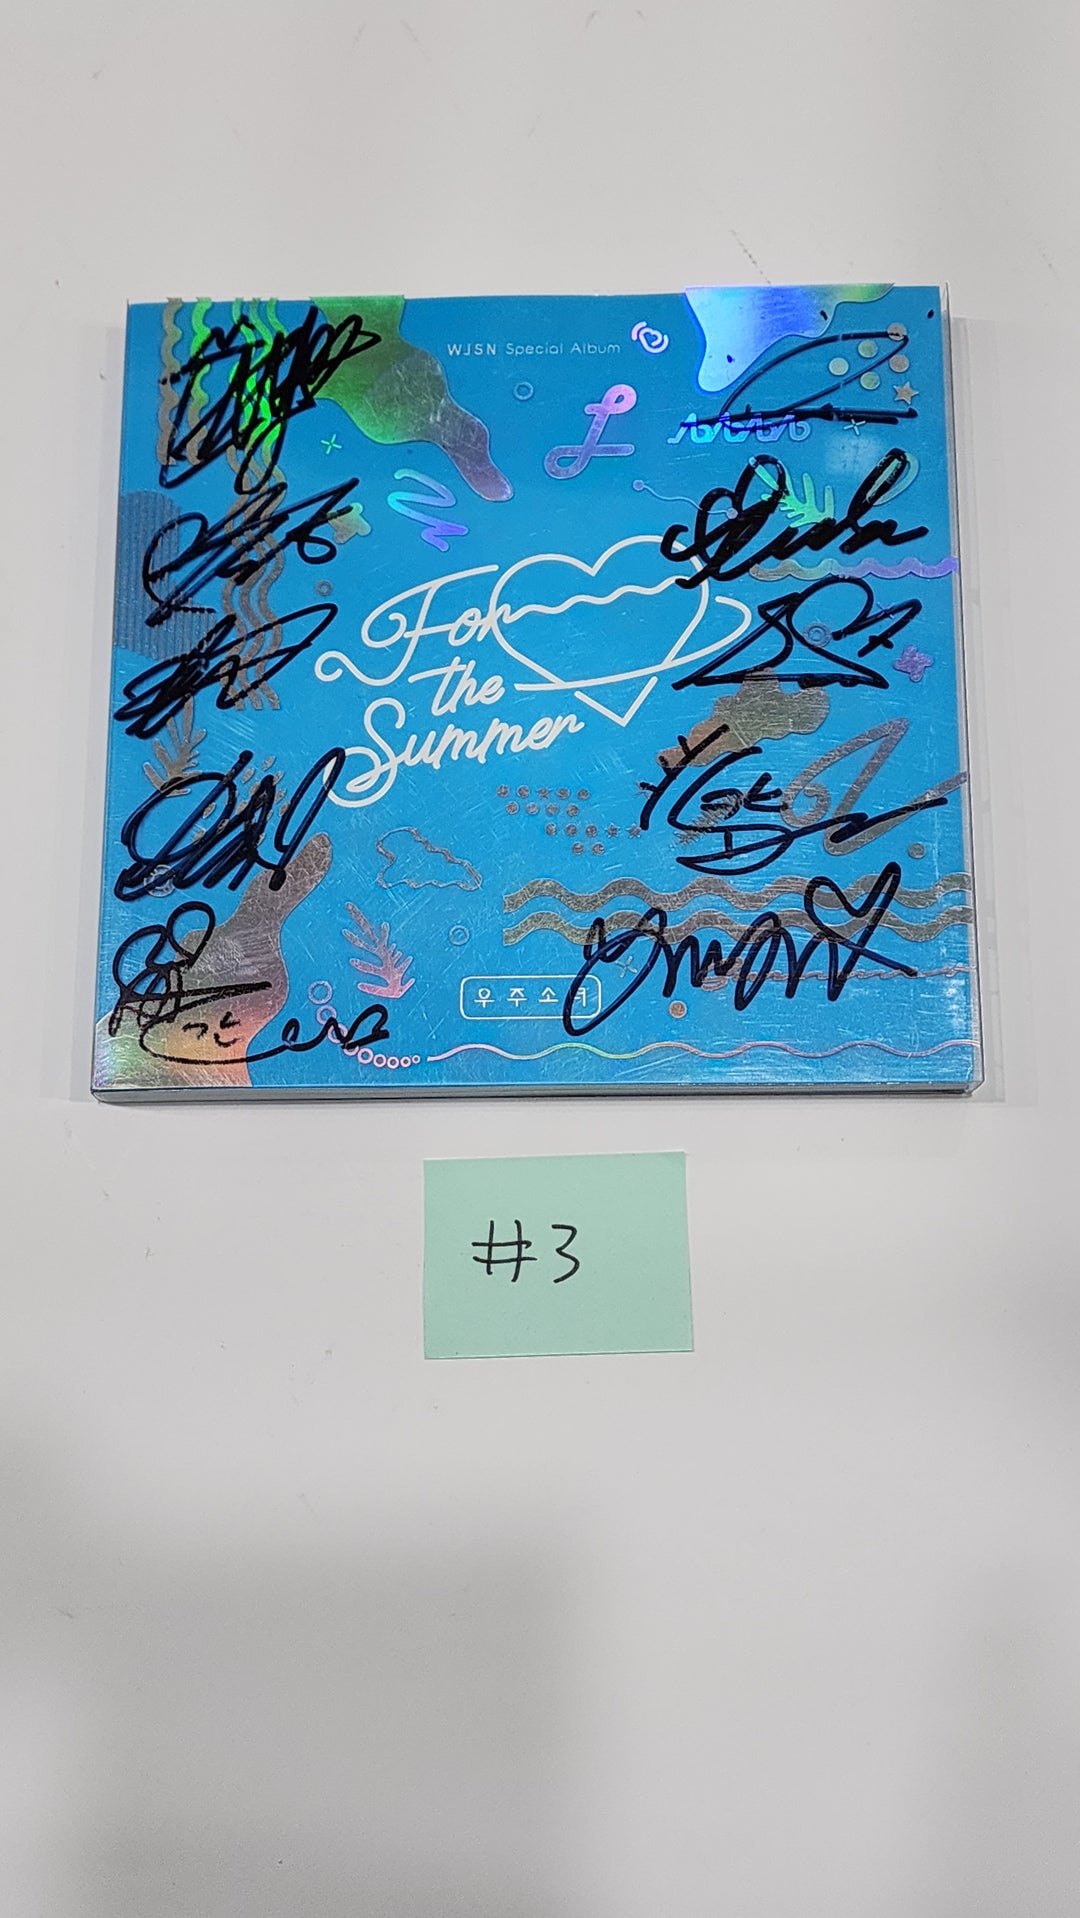 WJSN - Hand Autographed(Signed) Promo Album [24.6.14]